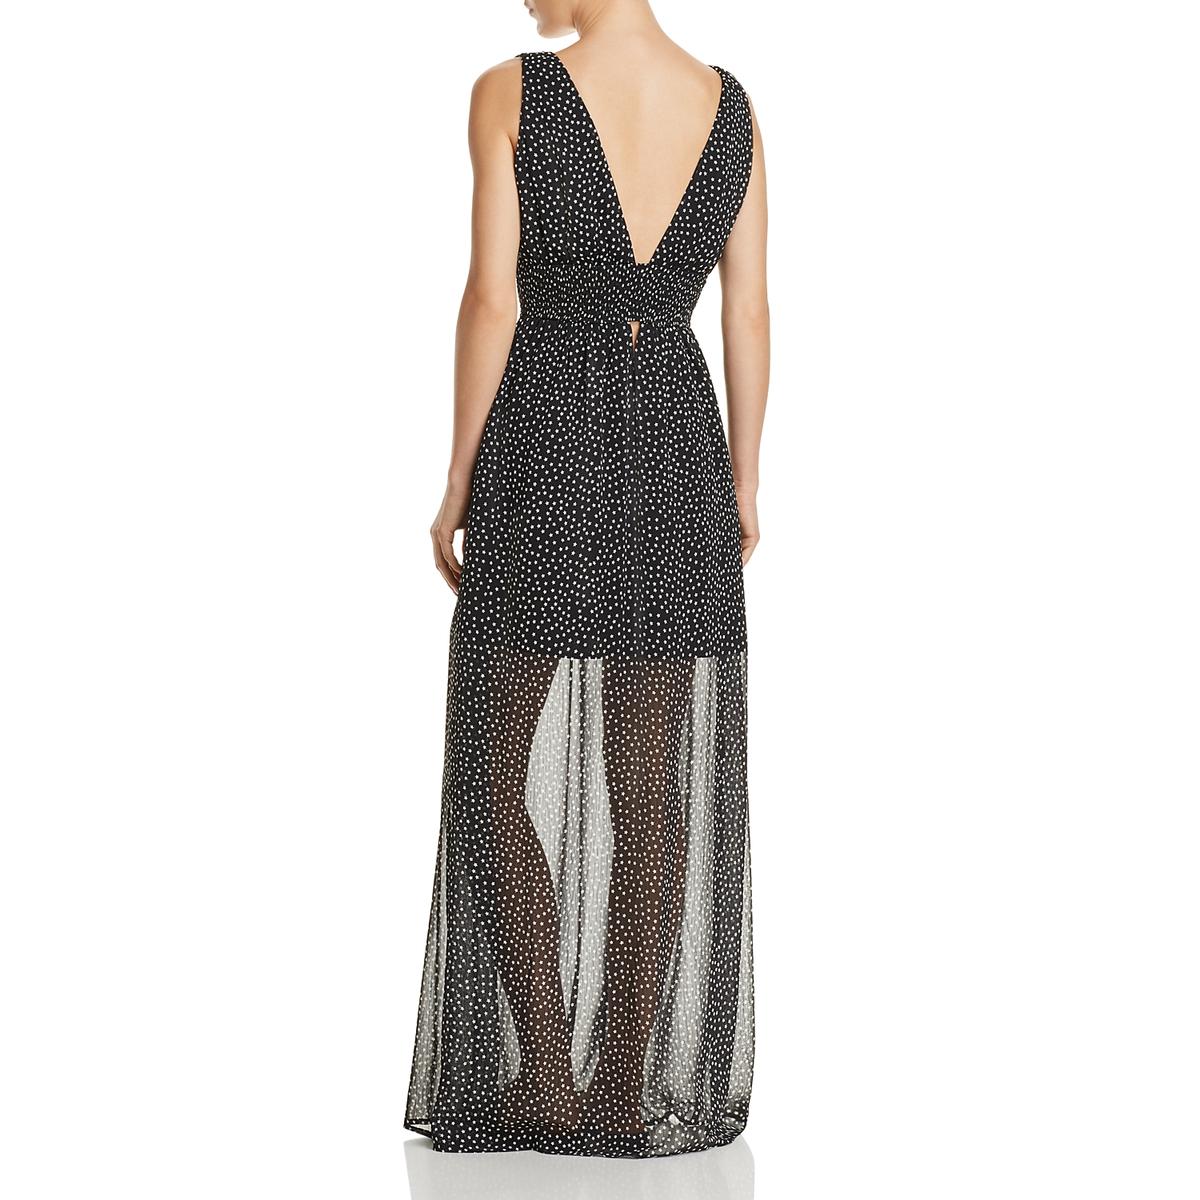 Re:named Womens B/W Casual Printed Sleeveless Maxi Dress S BHFO 6279 | eBay